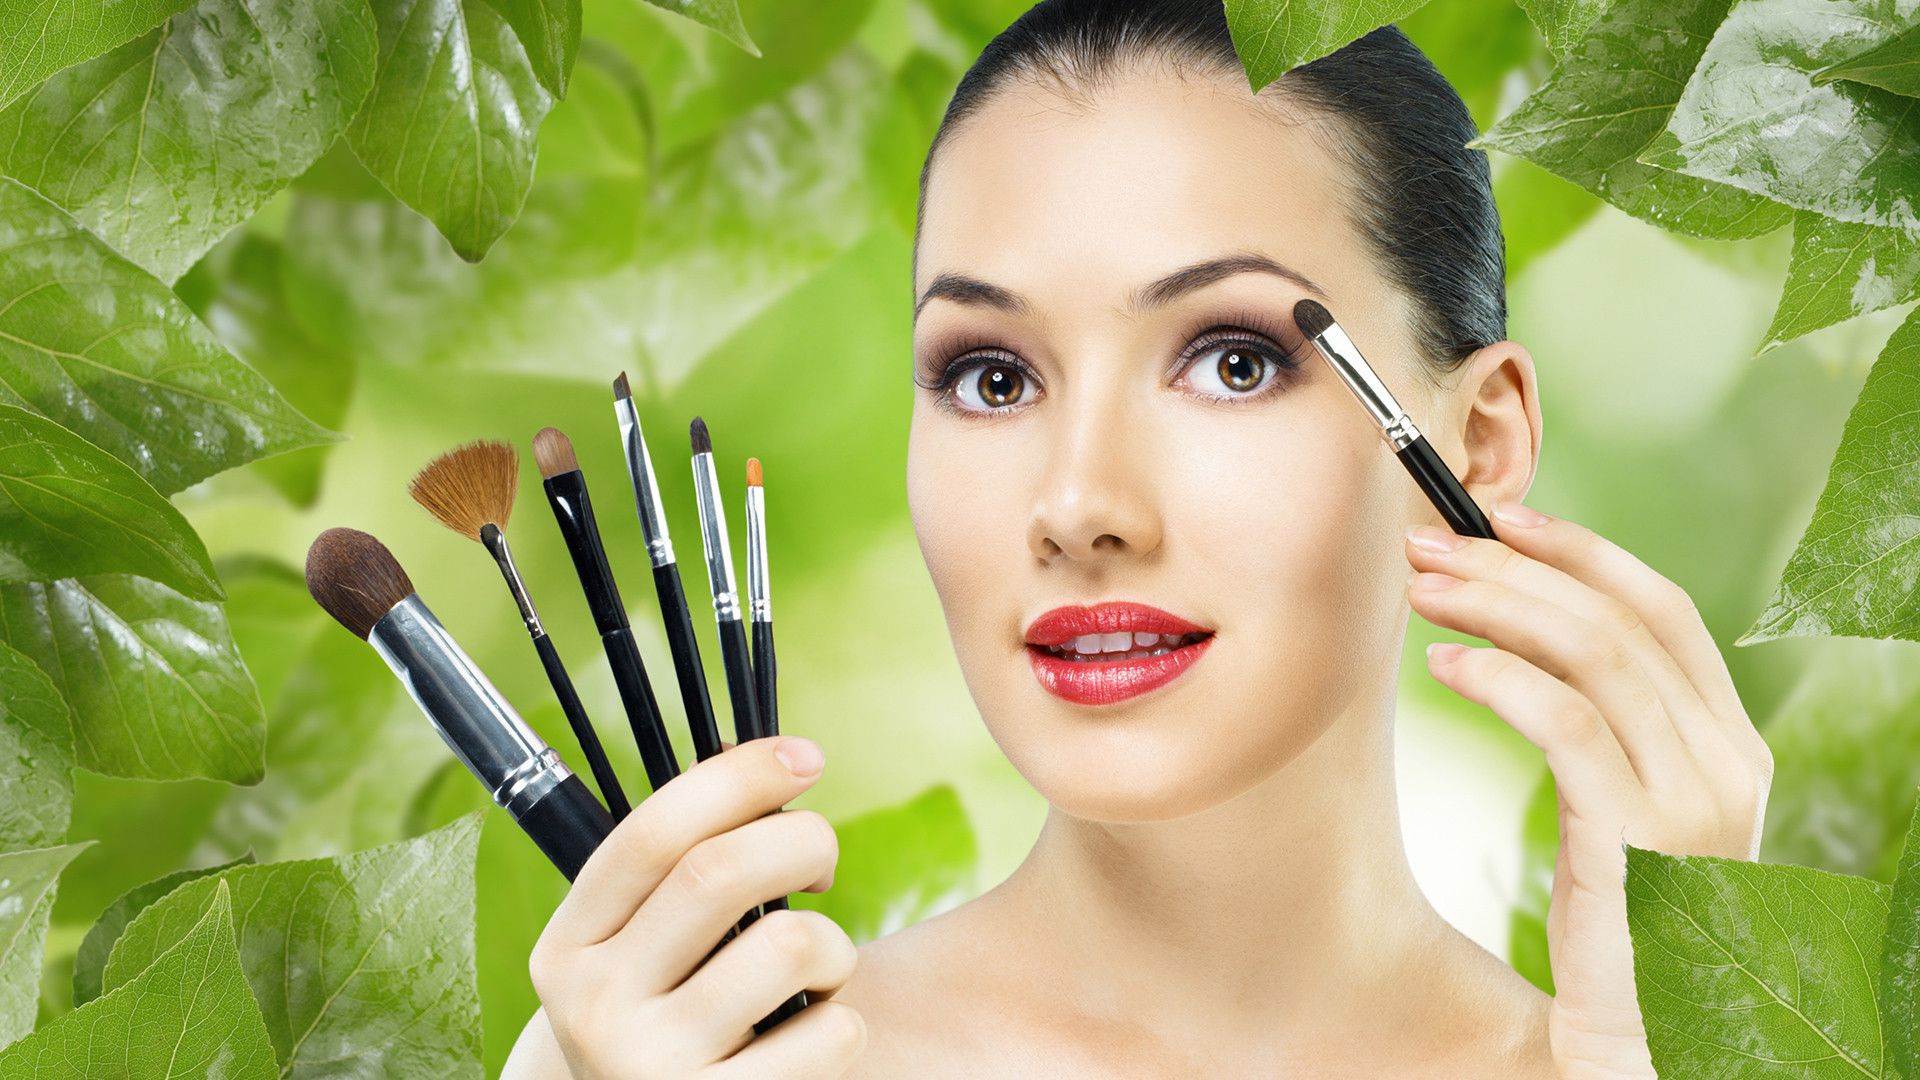 24016 Wallpaper Beauty Salon Images Stock Photos  Vectors  Shutterstock